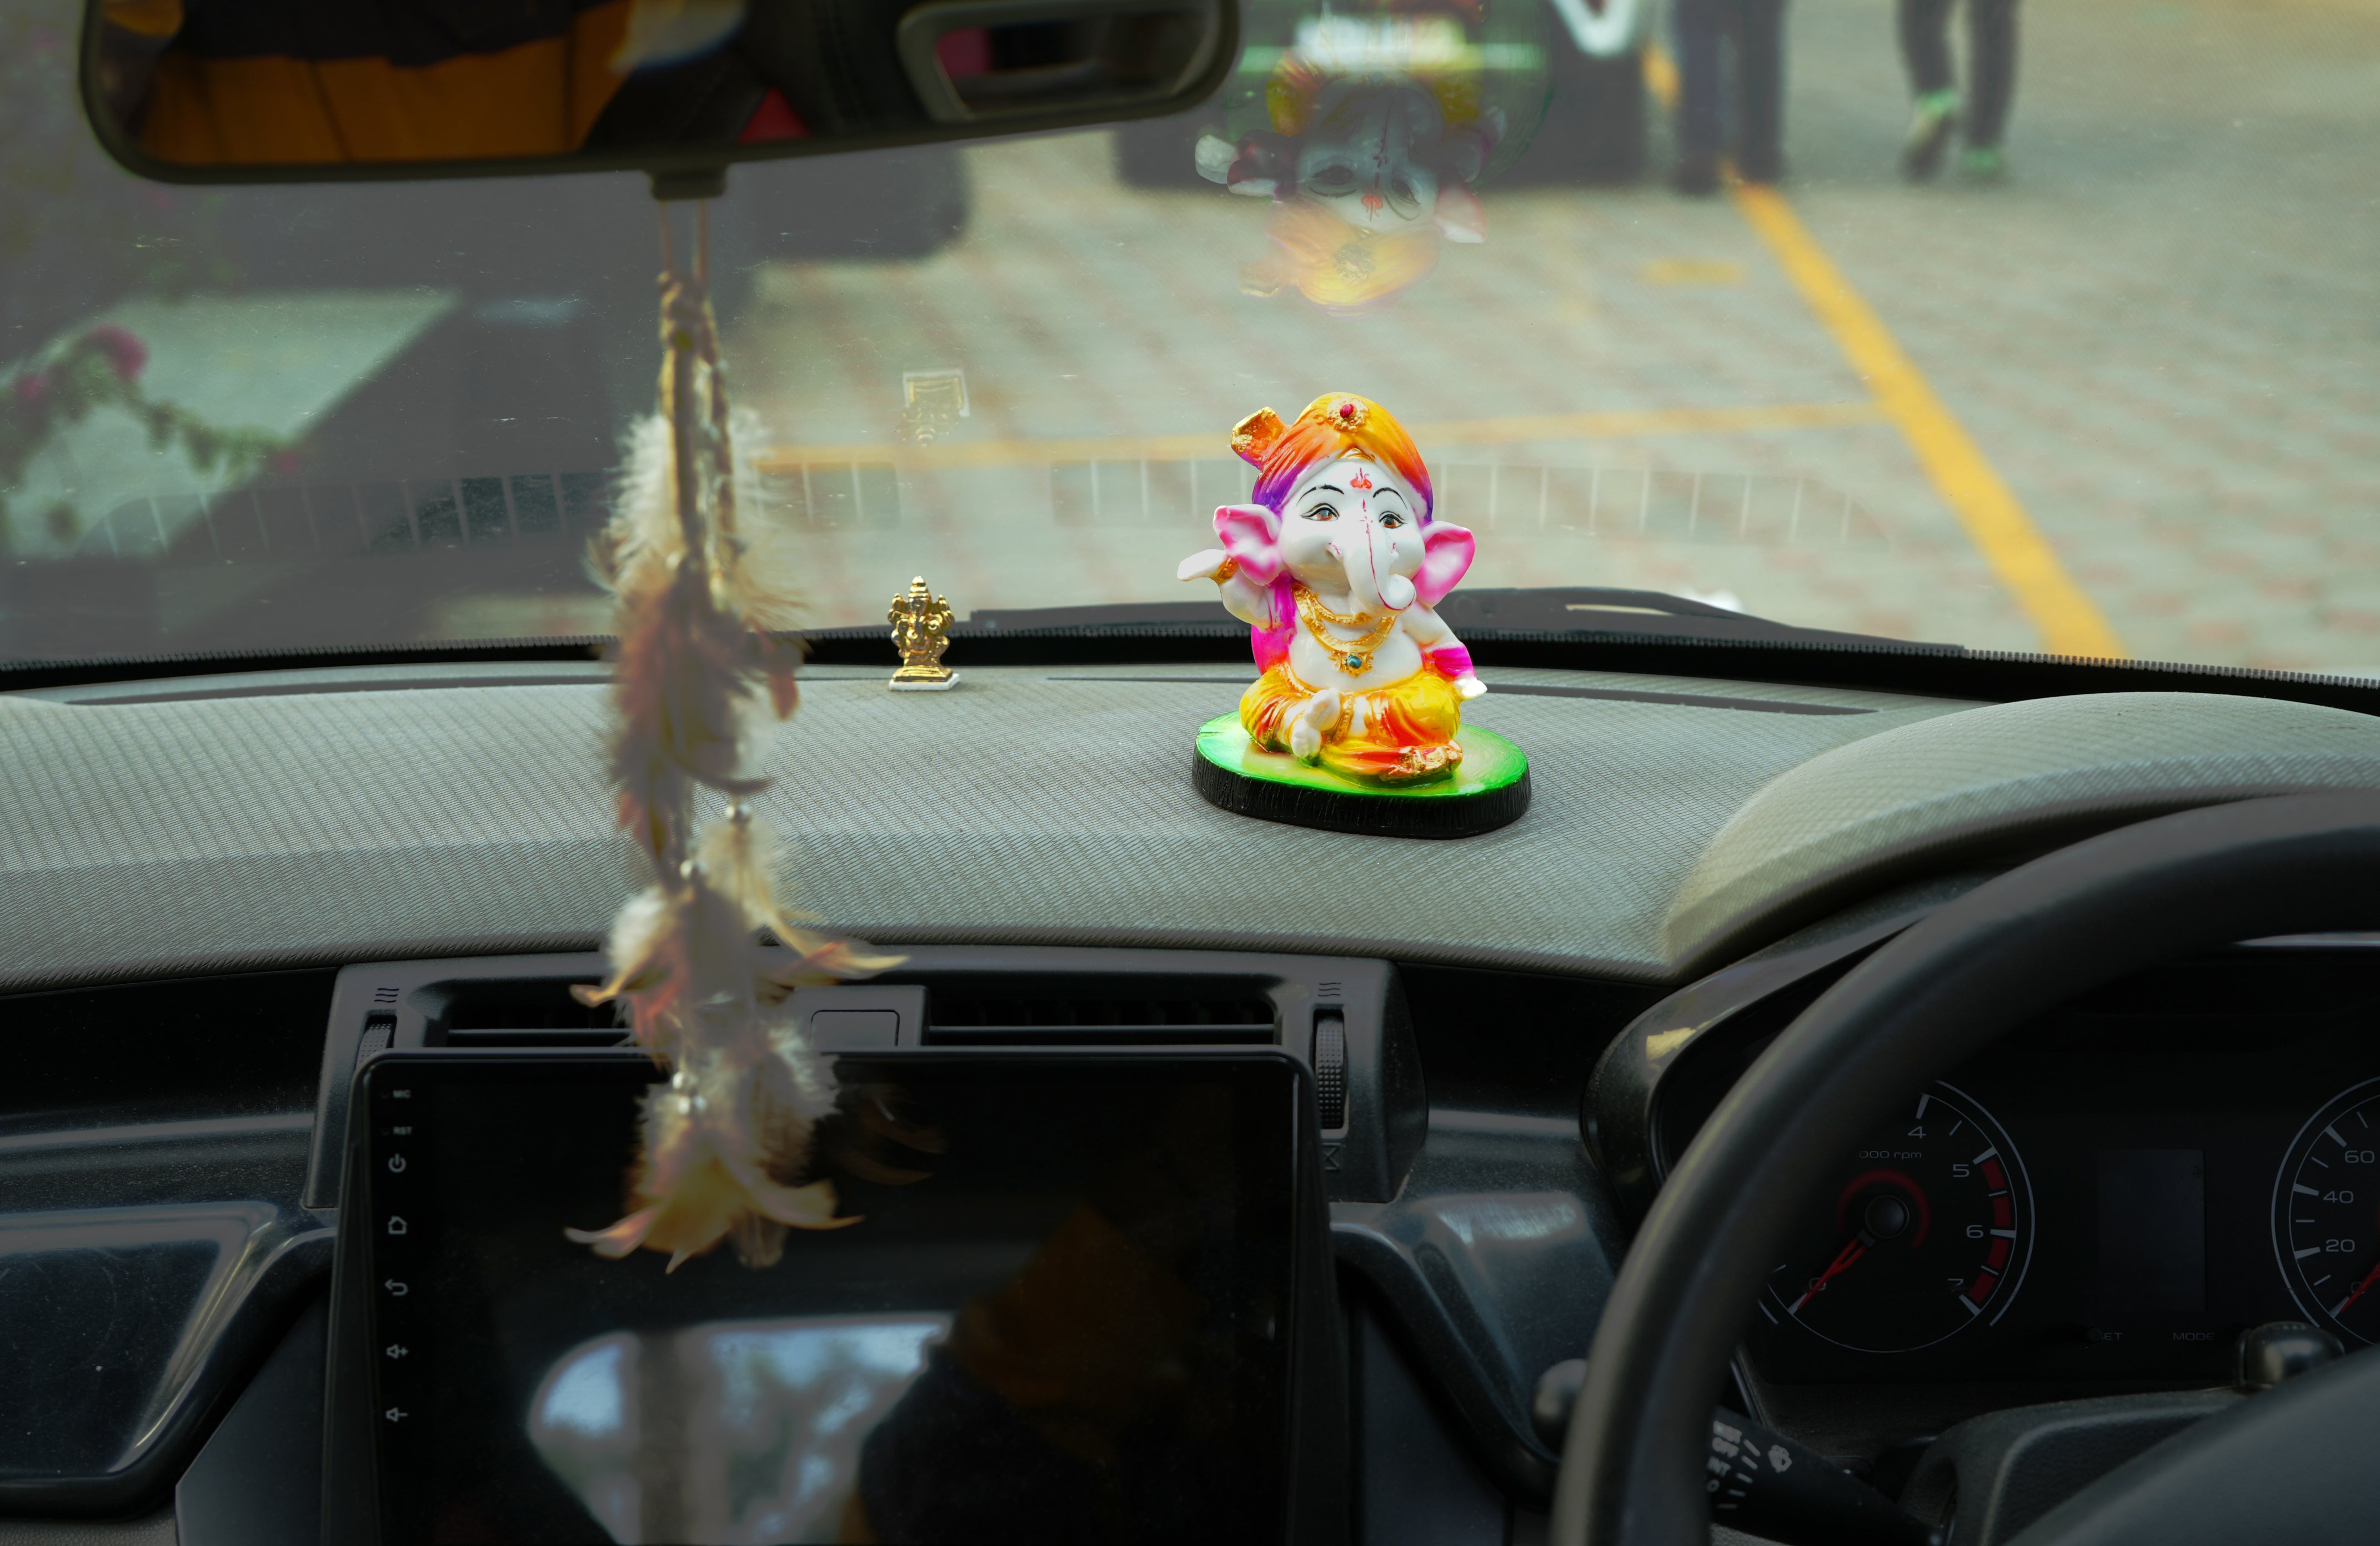 Cute Ganesha Statue Sculpture Hindu God Idol Handmade Figurine Good Luck Gift for Car Dashboard- Yellow, Green Base